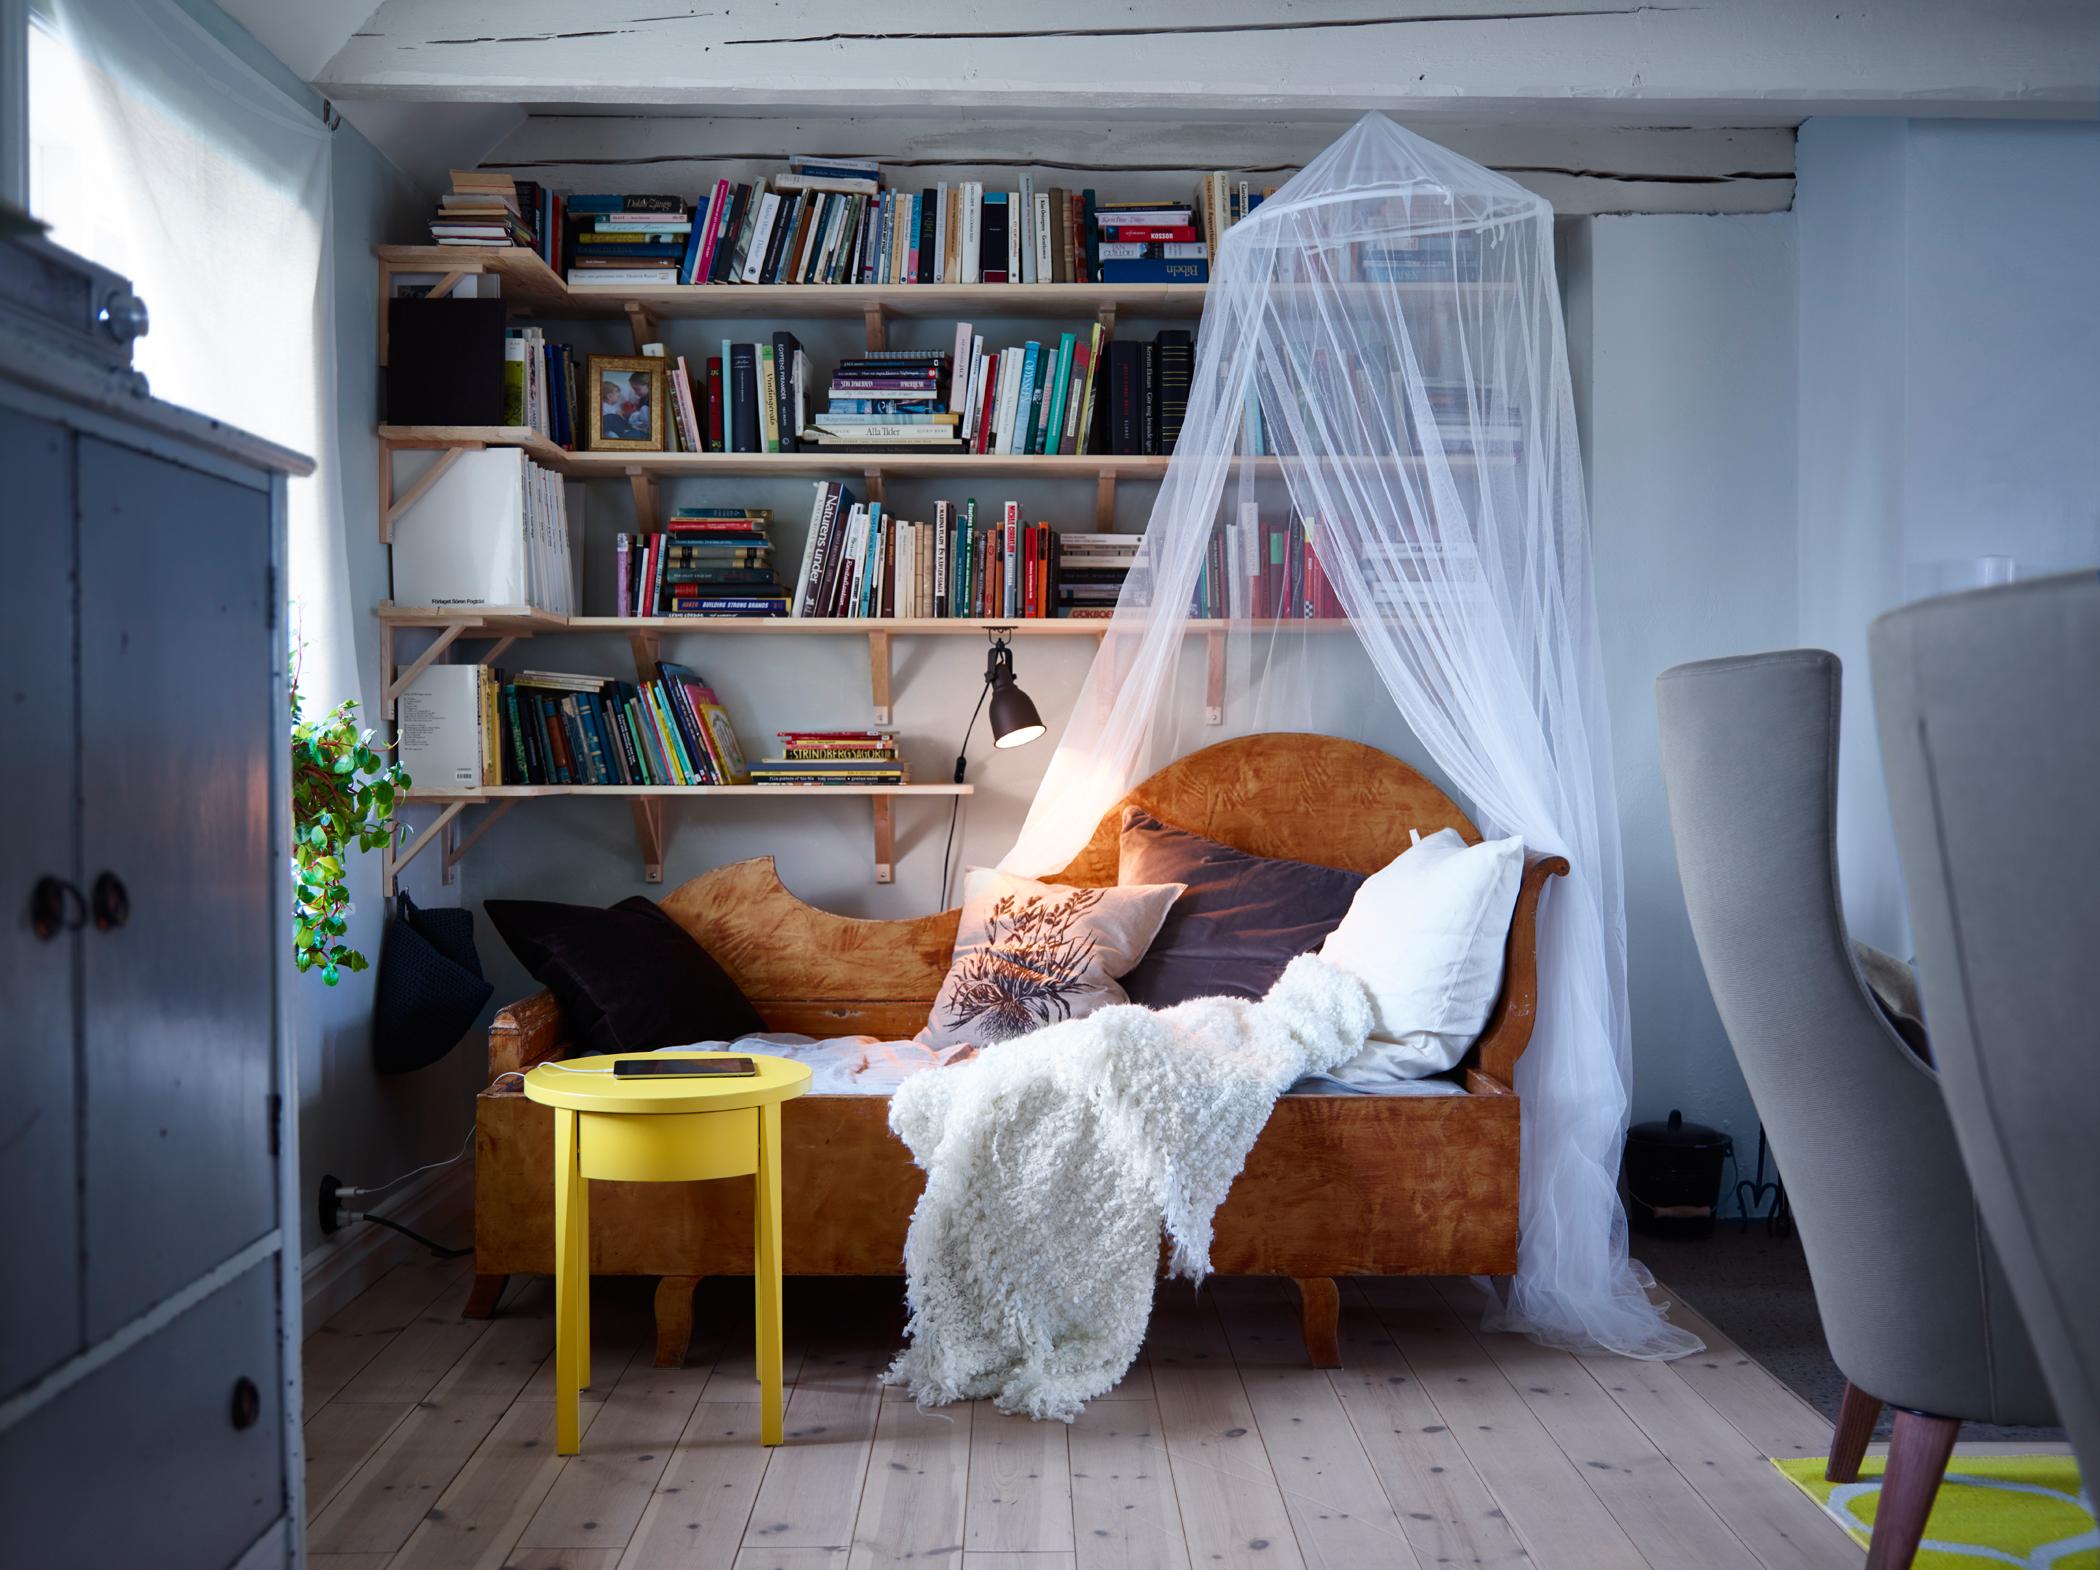 Gemütliche Leseecke im Wohnzimmer #bett #ikea #leseecke #grauersessel #wandboard #moskitonetz #zimmergestaltung ©Inter IKEA Systems B.V.